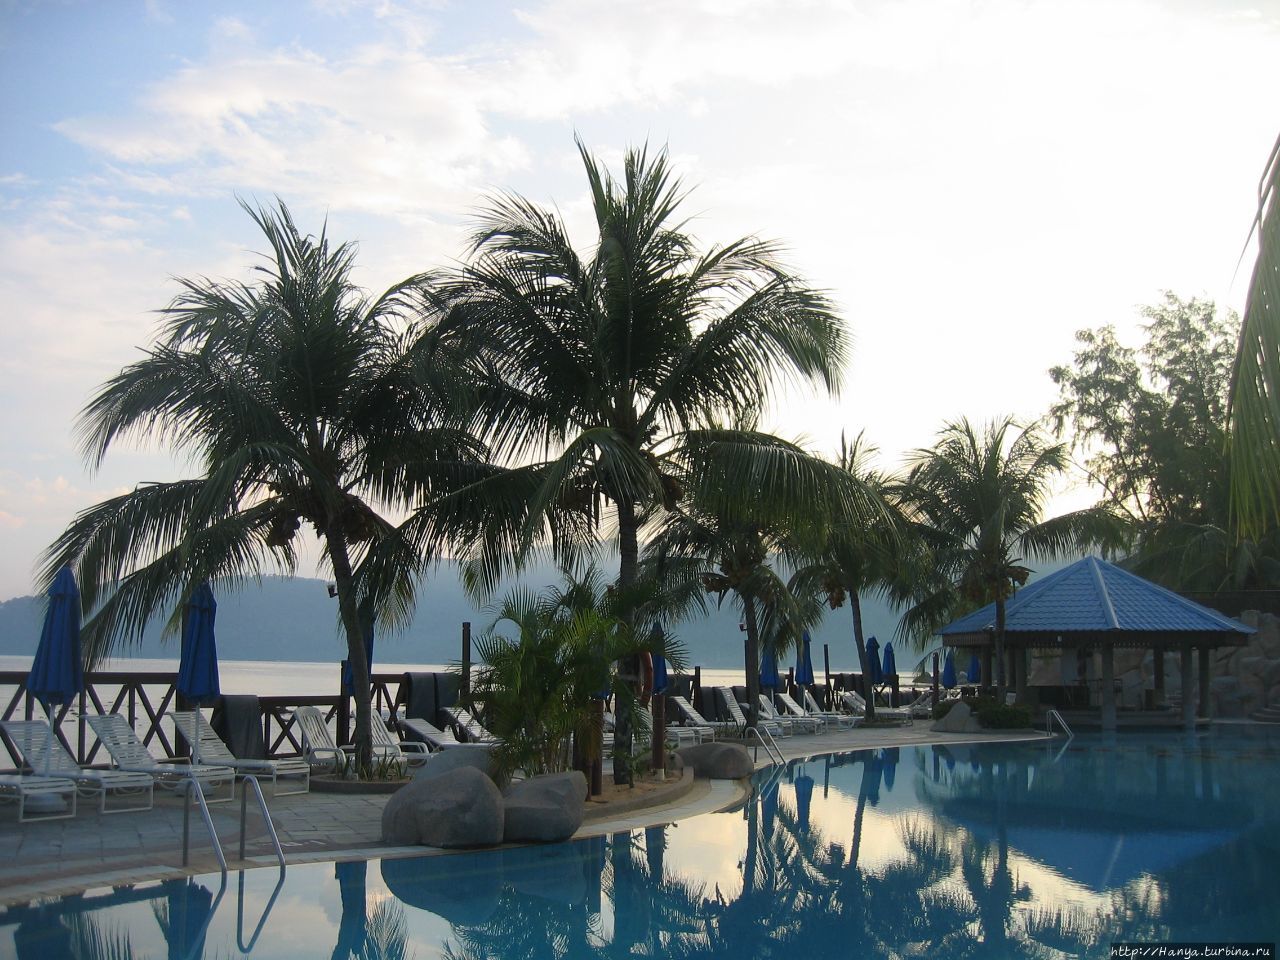 Отель Berjaya Tioman Beach 4* / Berjaya Tioman Beach Hotel 4*